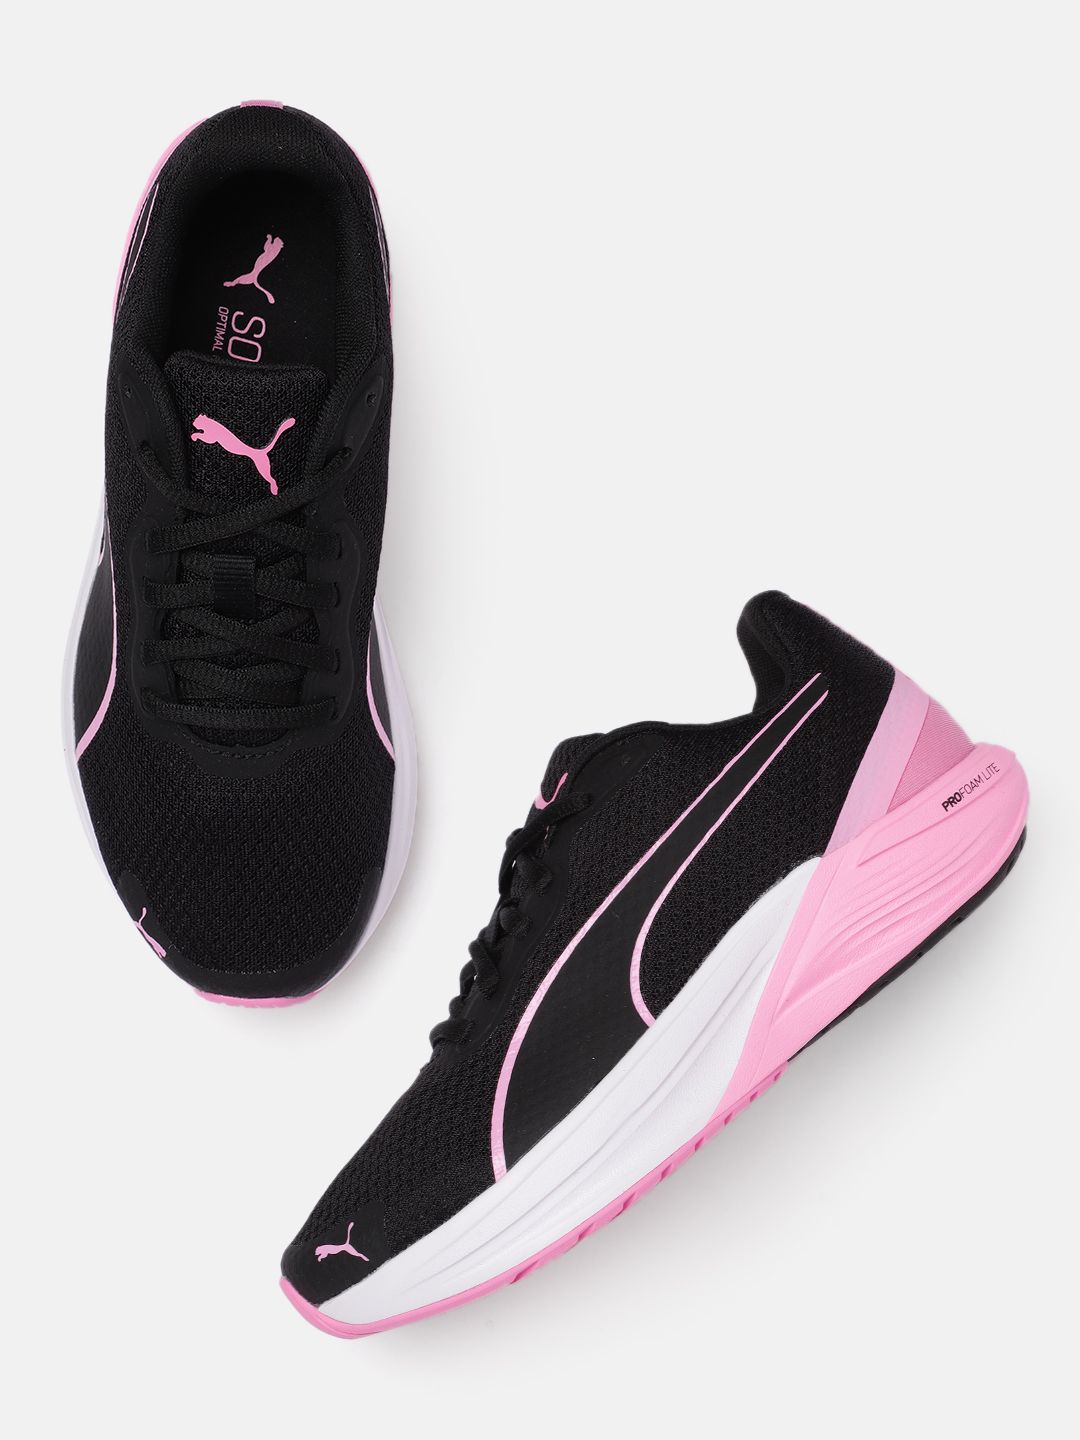 Puma Women Black Textile Running Shoes Price in India